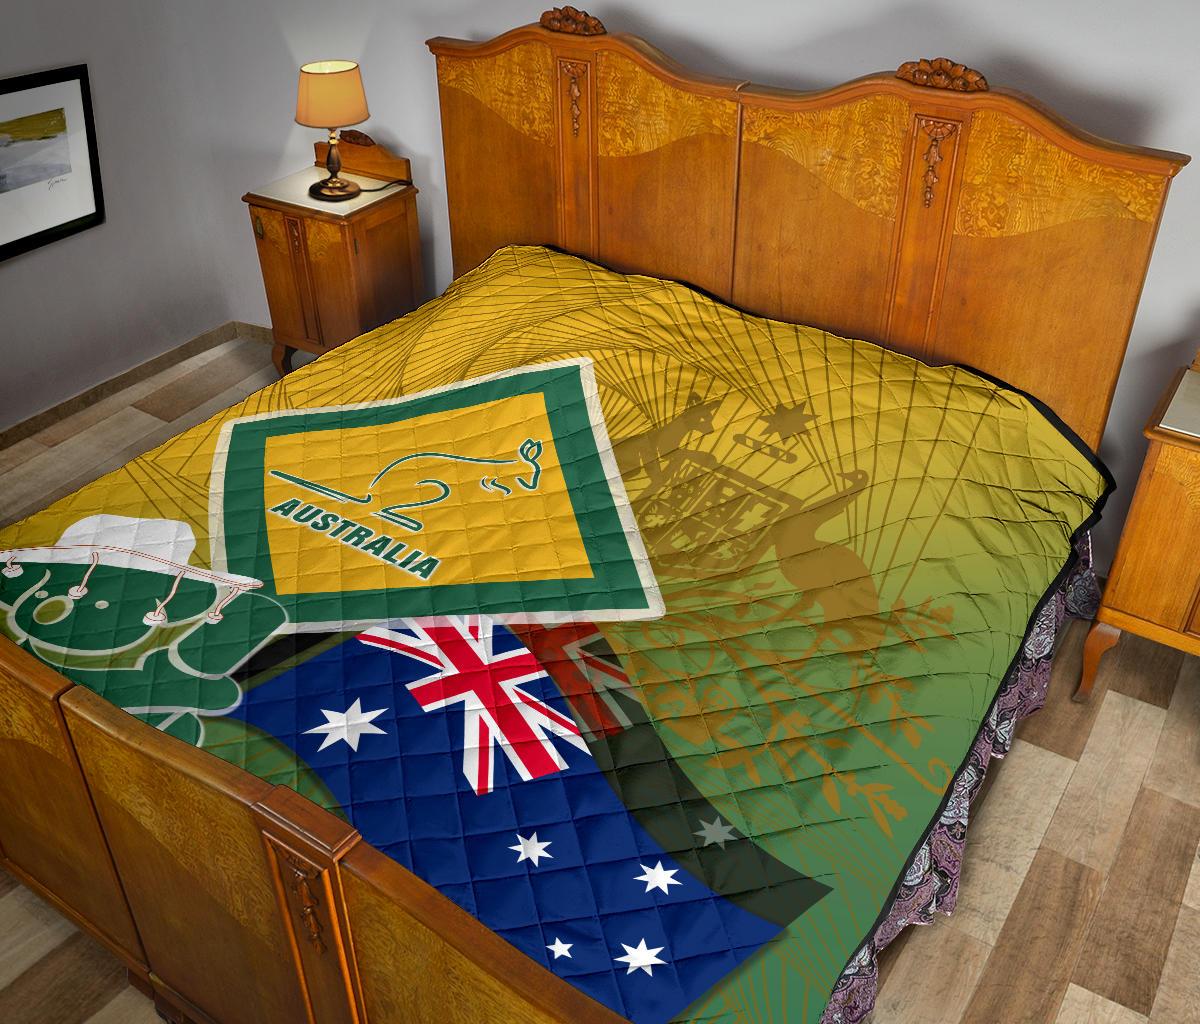 Premium Quilt - Aus Flag and Coat Of Arms Quilt Kangaroo and Koala Sign